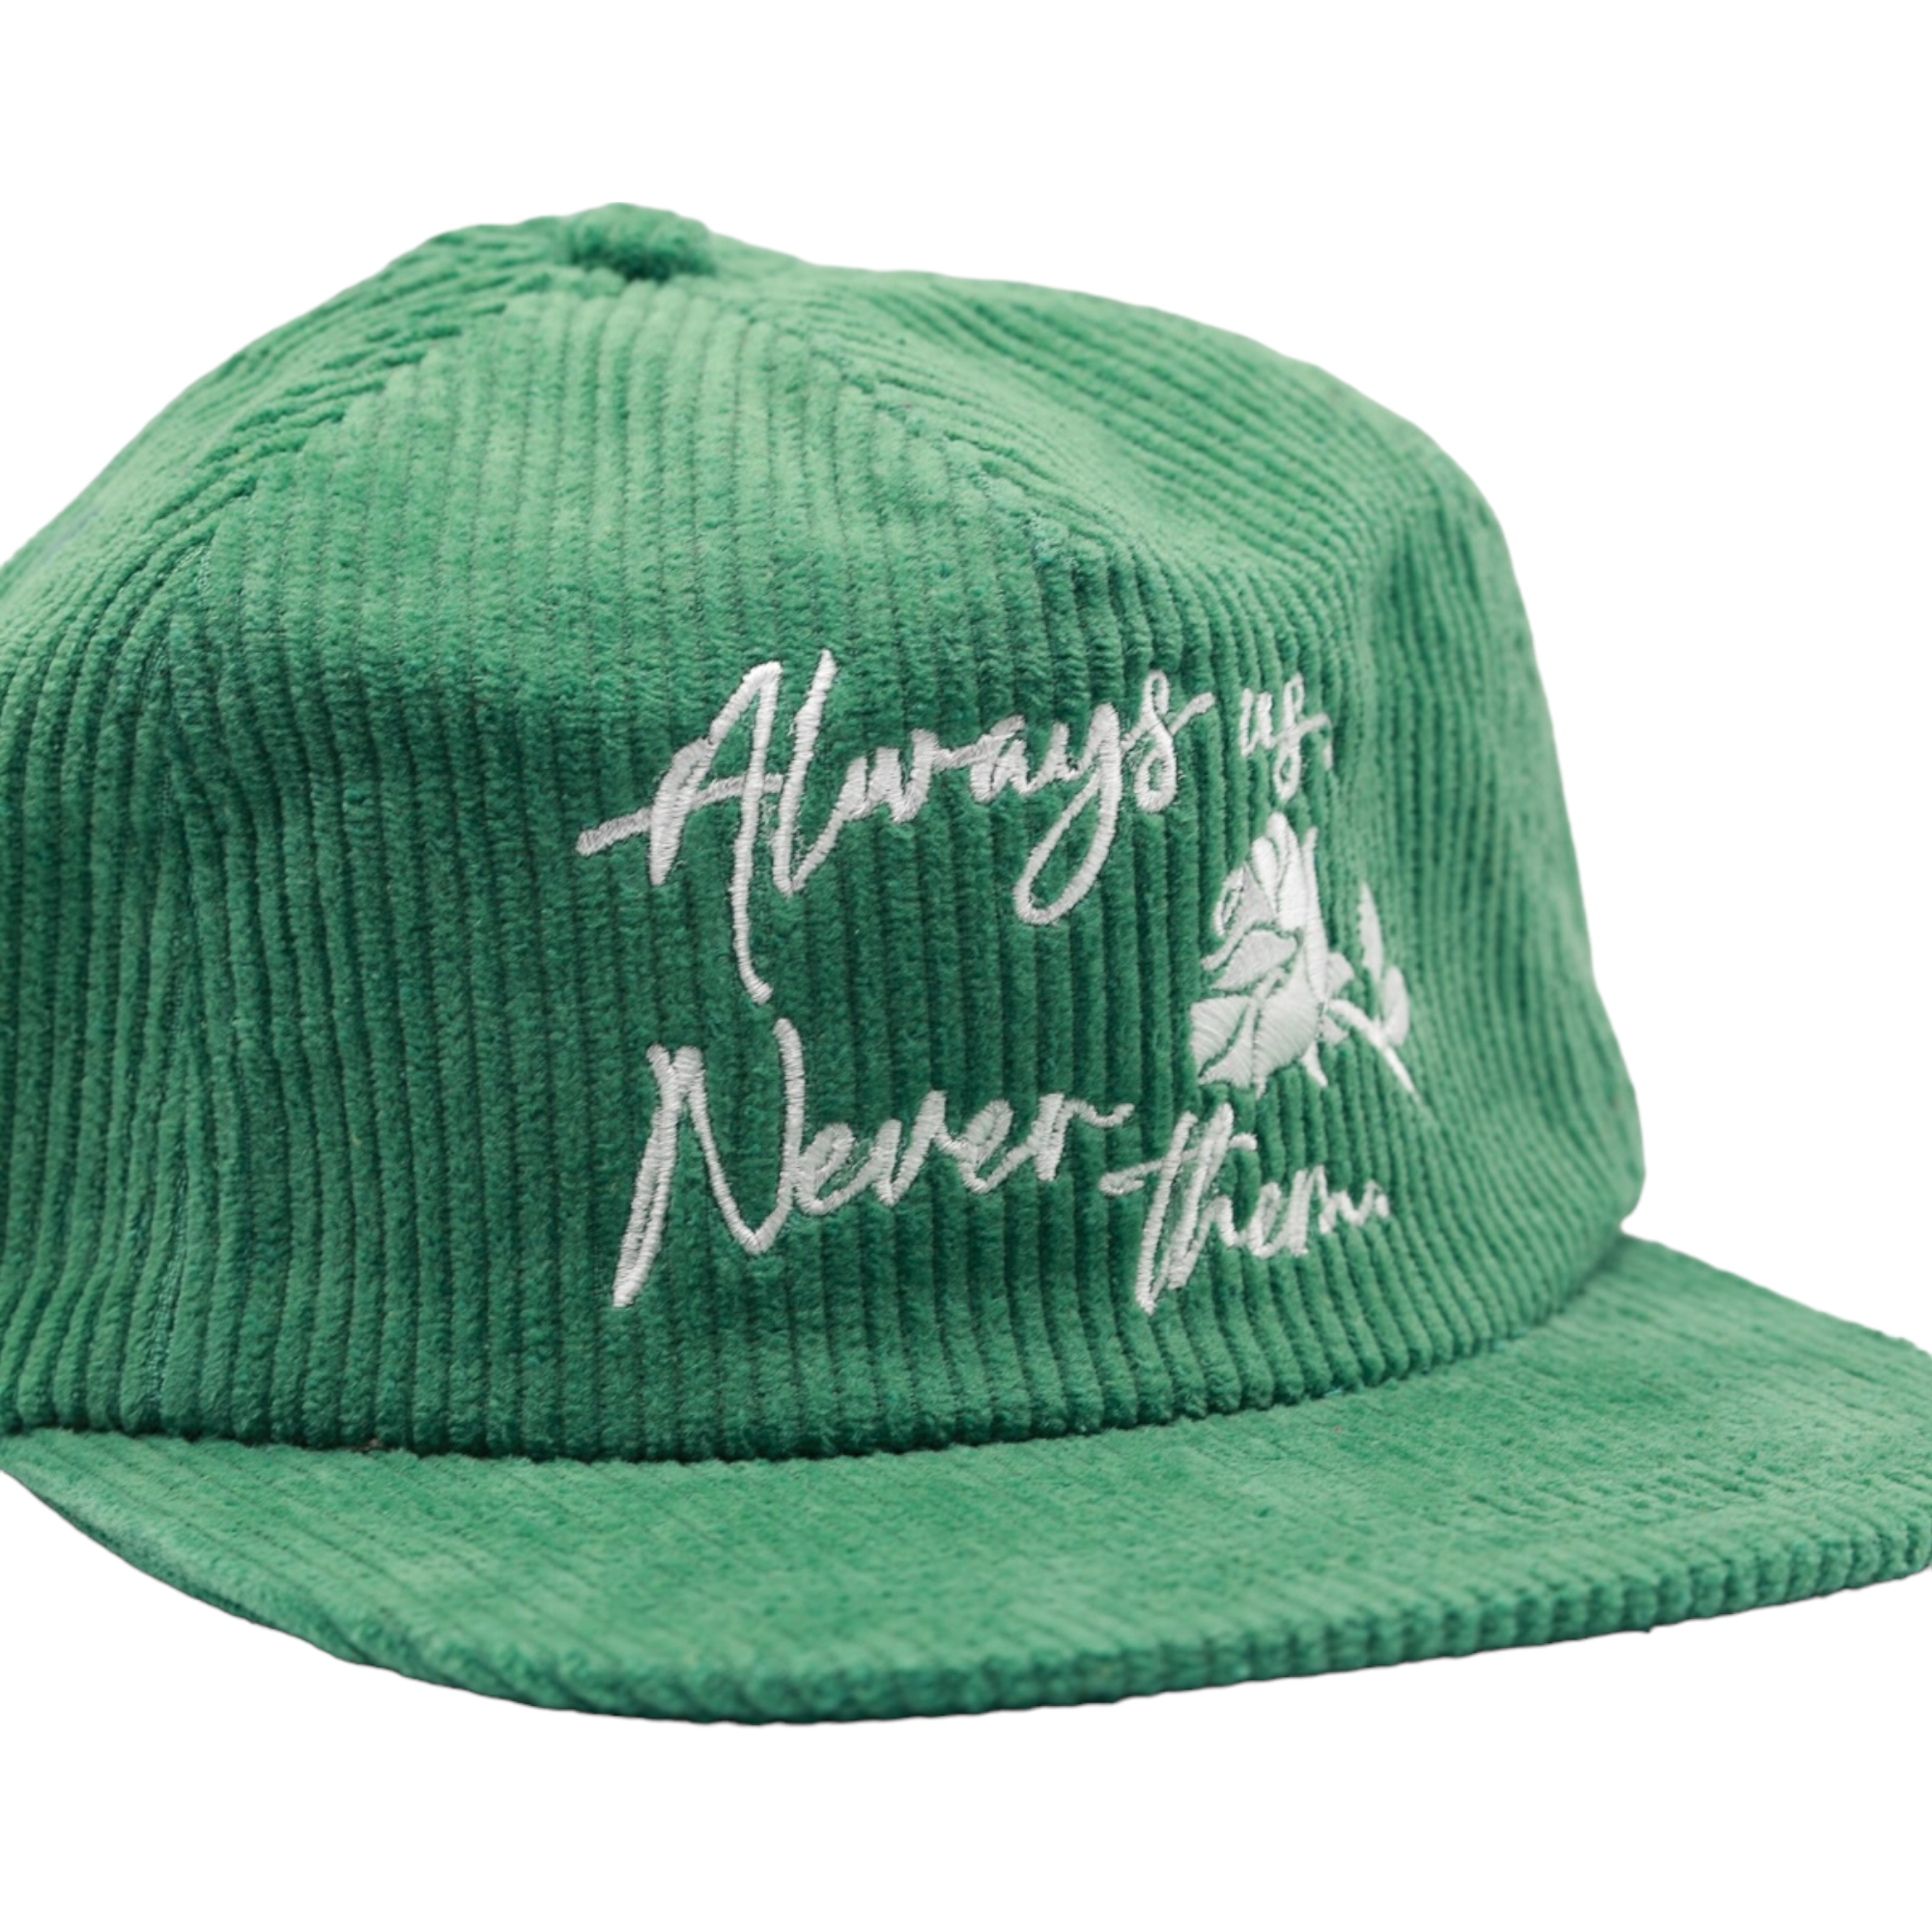 Always Us, Never Them - Emerald Corduroy Painters Cap